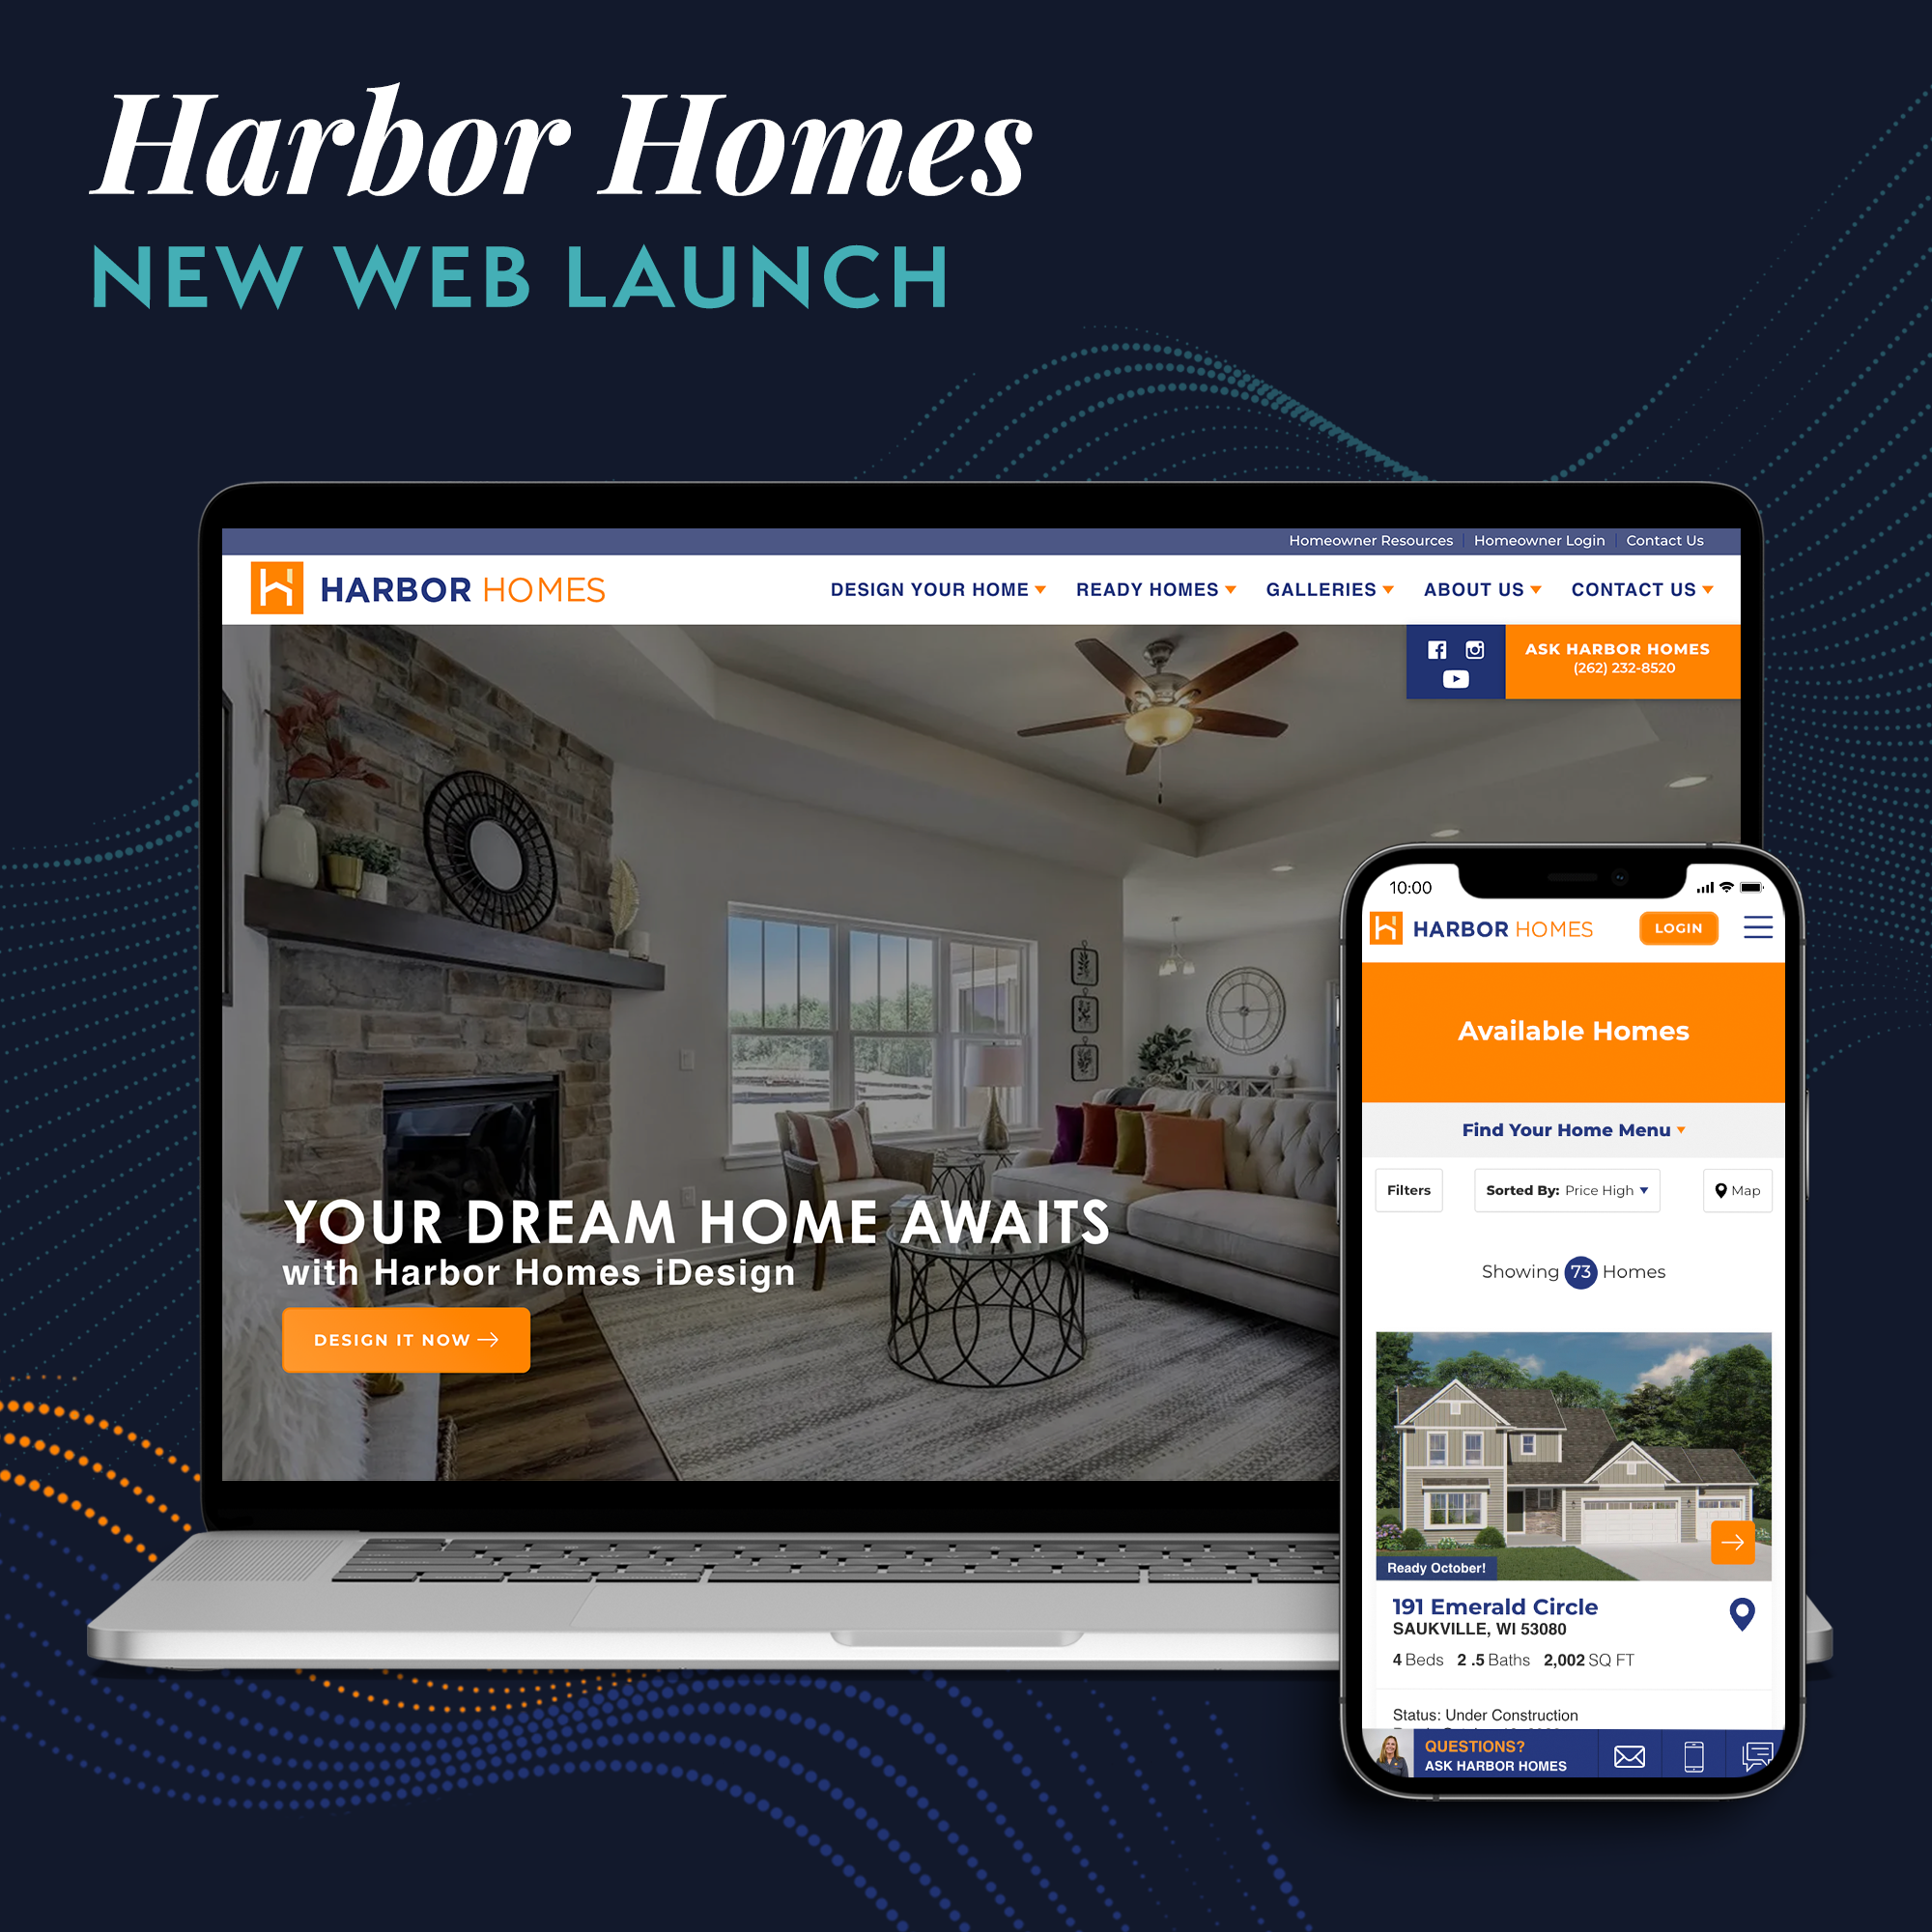 New Web Launch: Harbor Homes